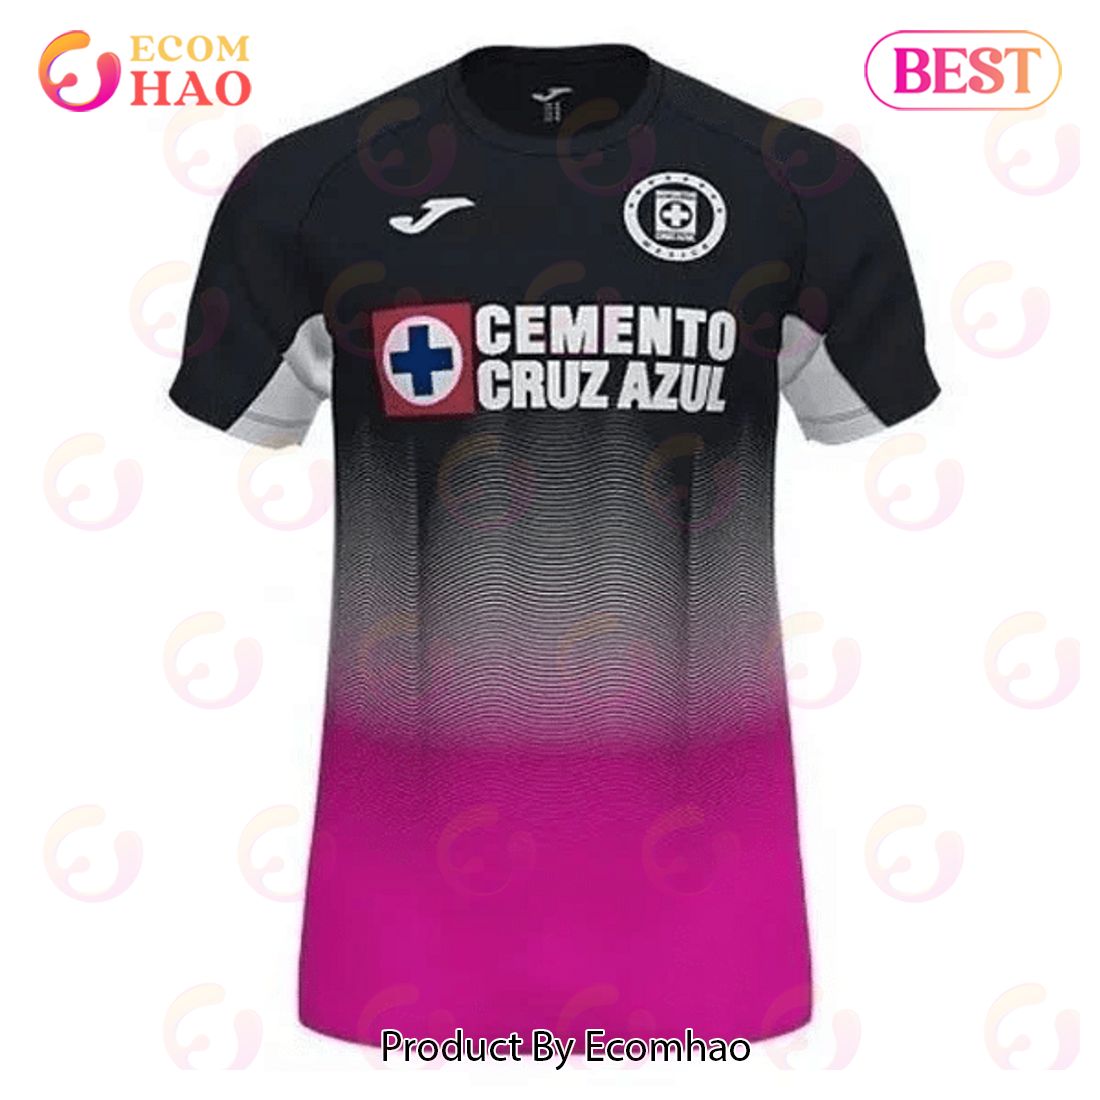 Cemento Cruz Azul Black Pink Color Mans Football Jersey Limited Edition